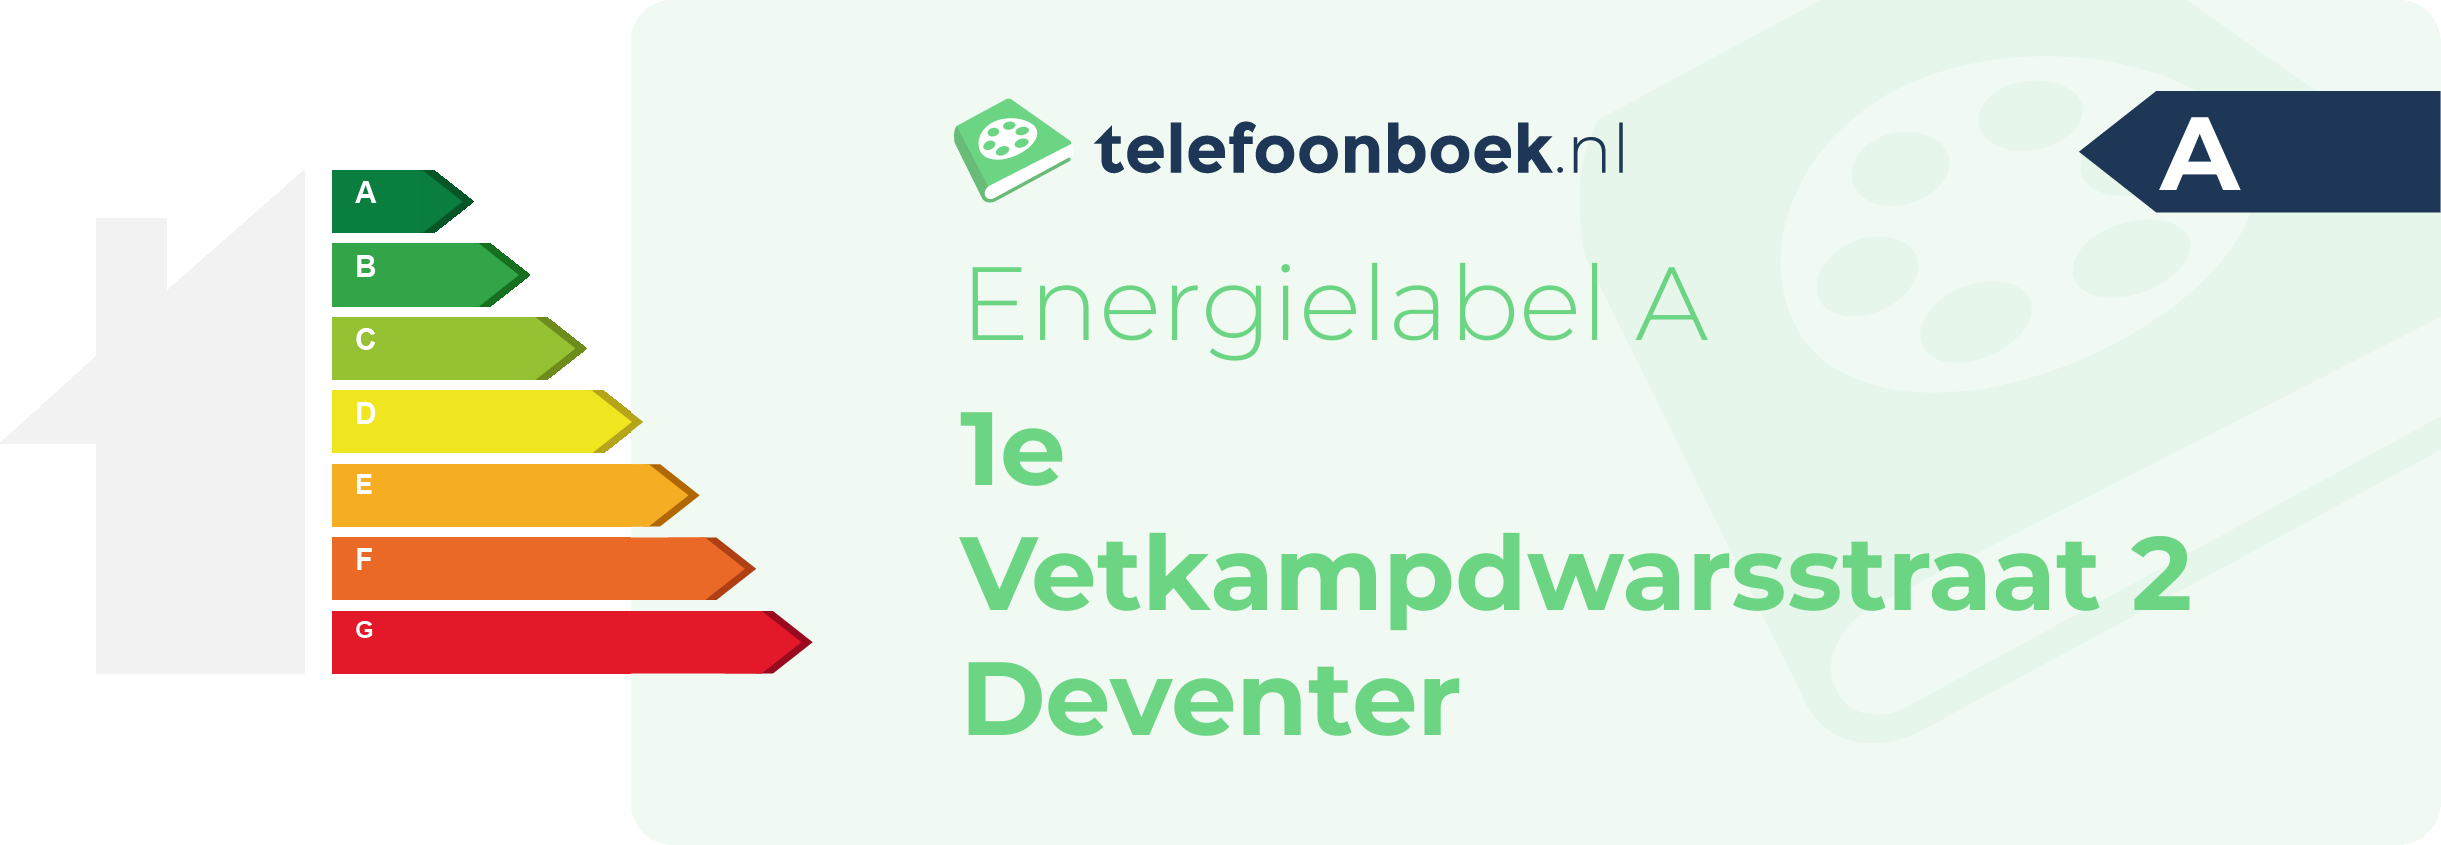 Energielabel 1e Vetkampdwarsstraat 2 Deventer